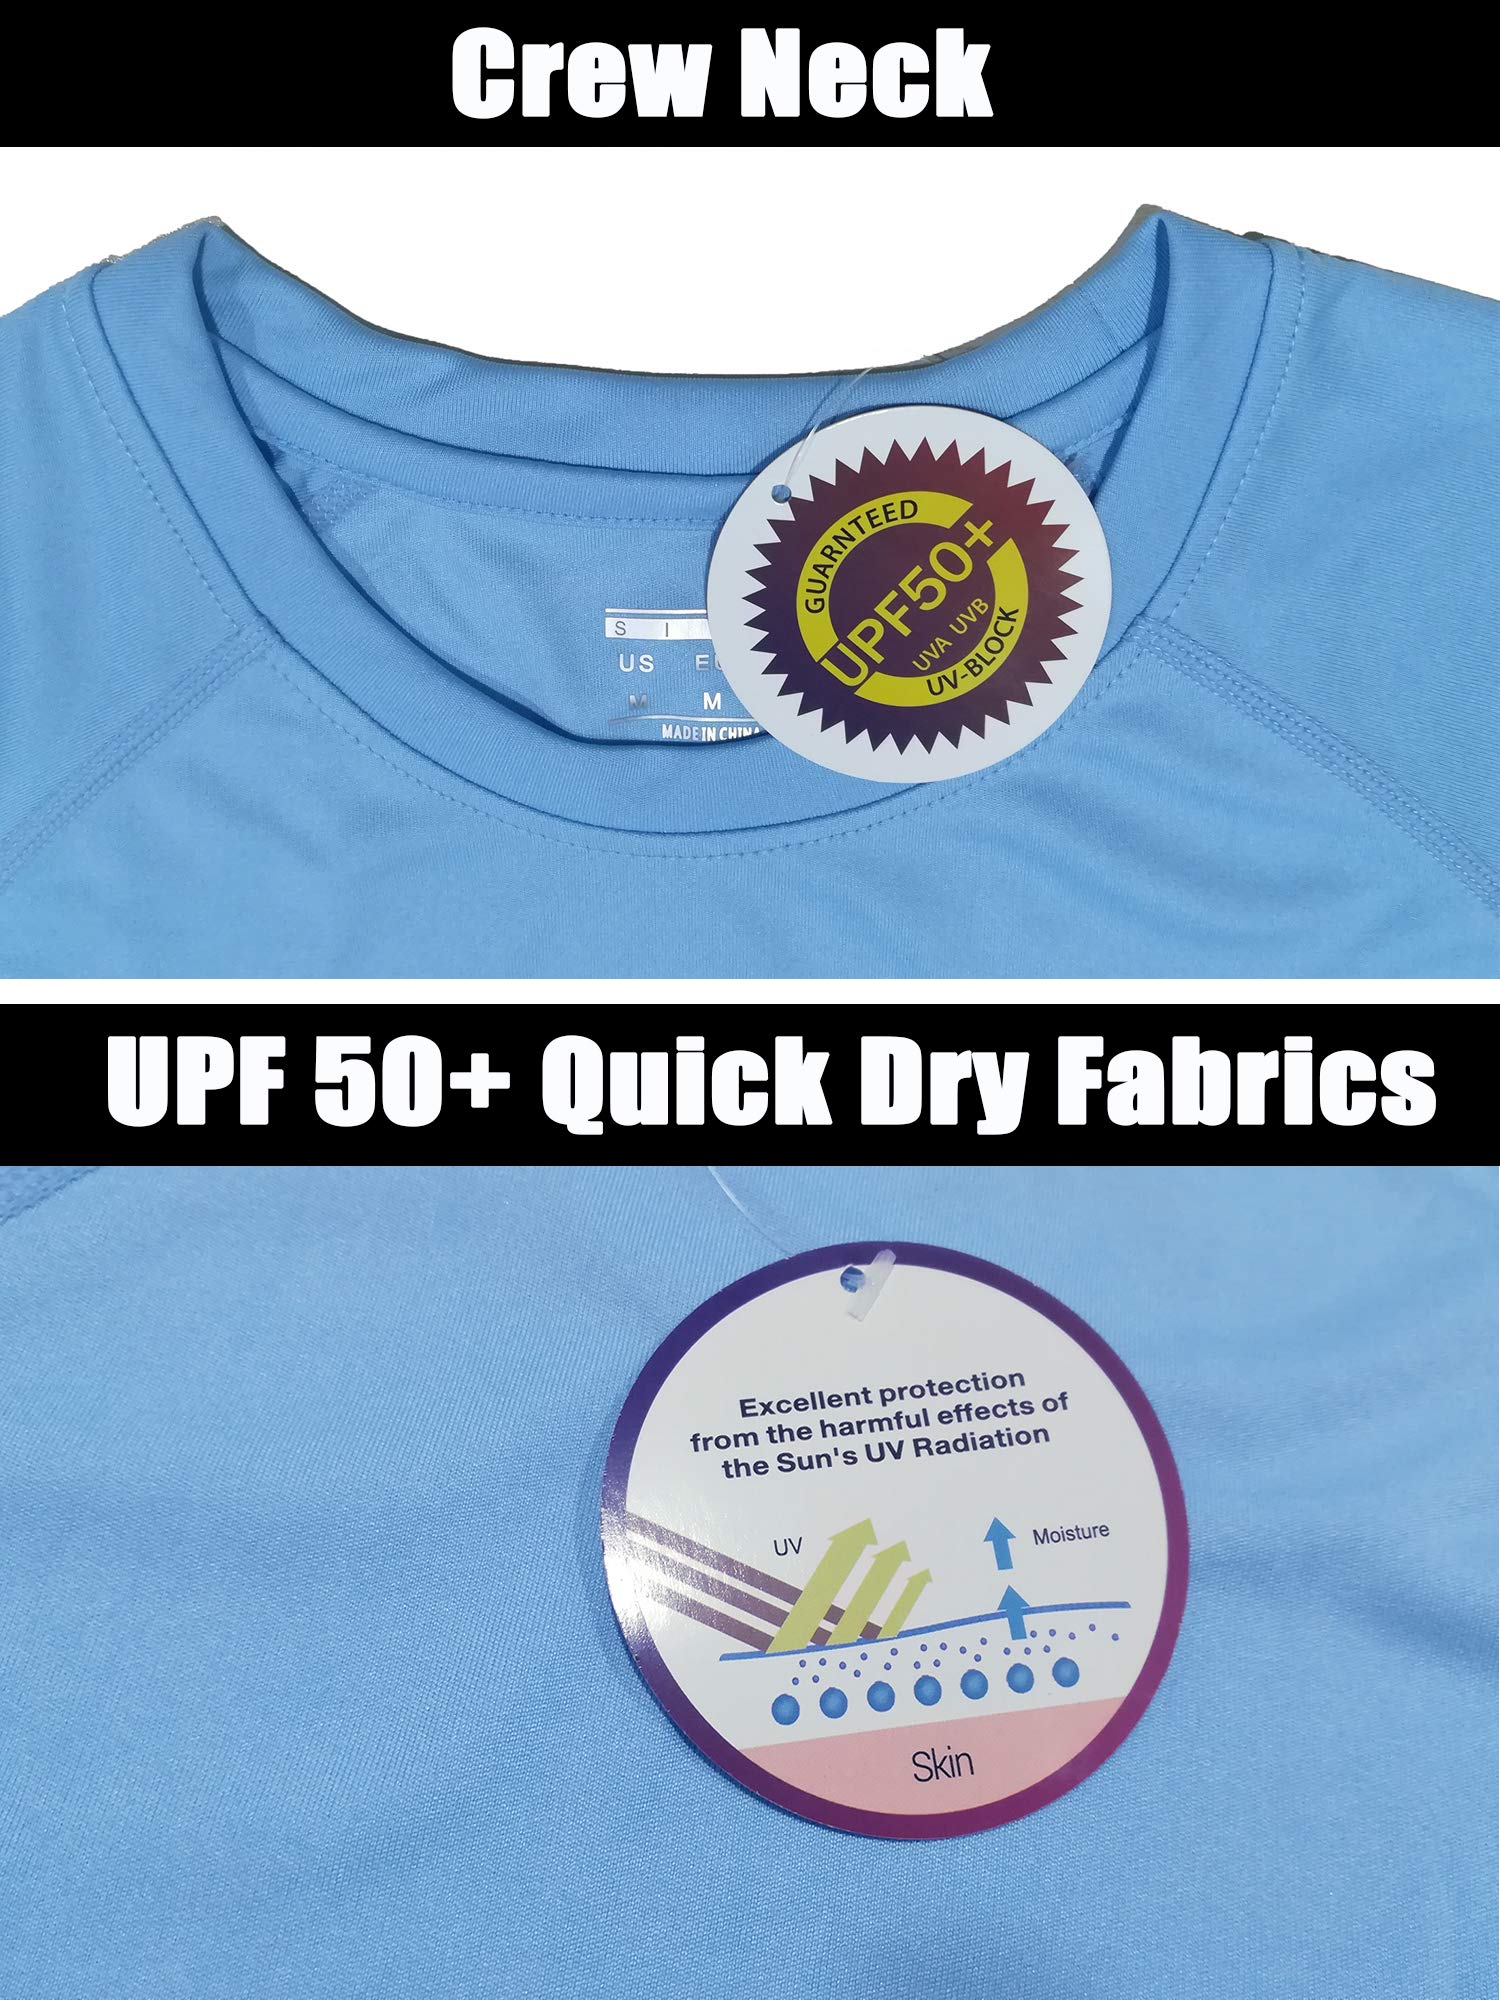 MAGCOMSEN Men's Long Sleeve Shirts UPF 50+ UV Sun Protection Athletic Shirts for Hiking Running Workout Rash Guard